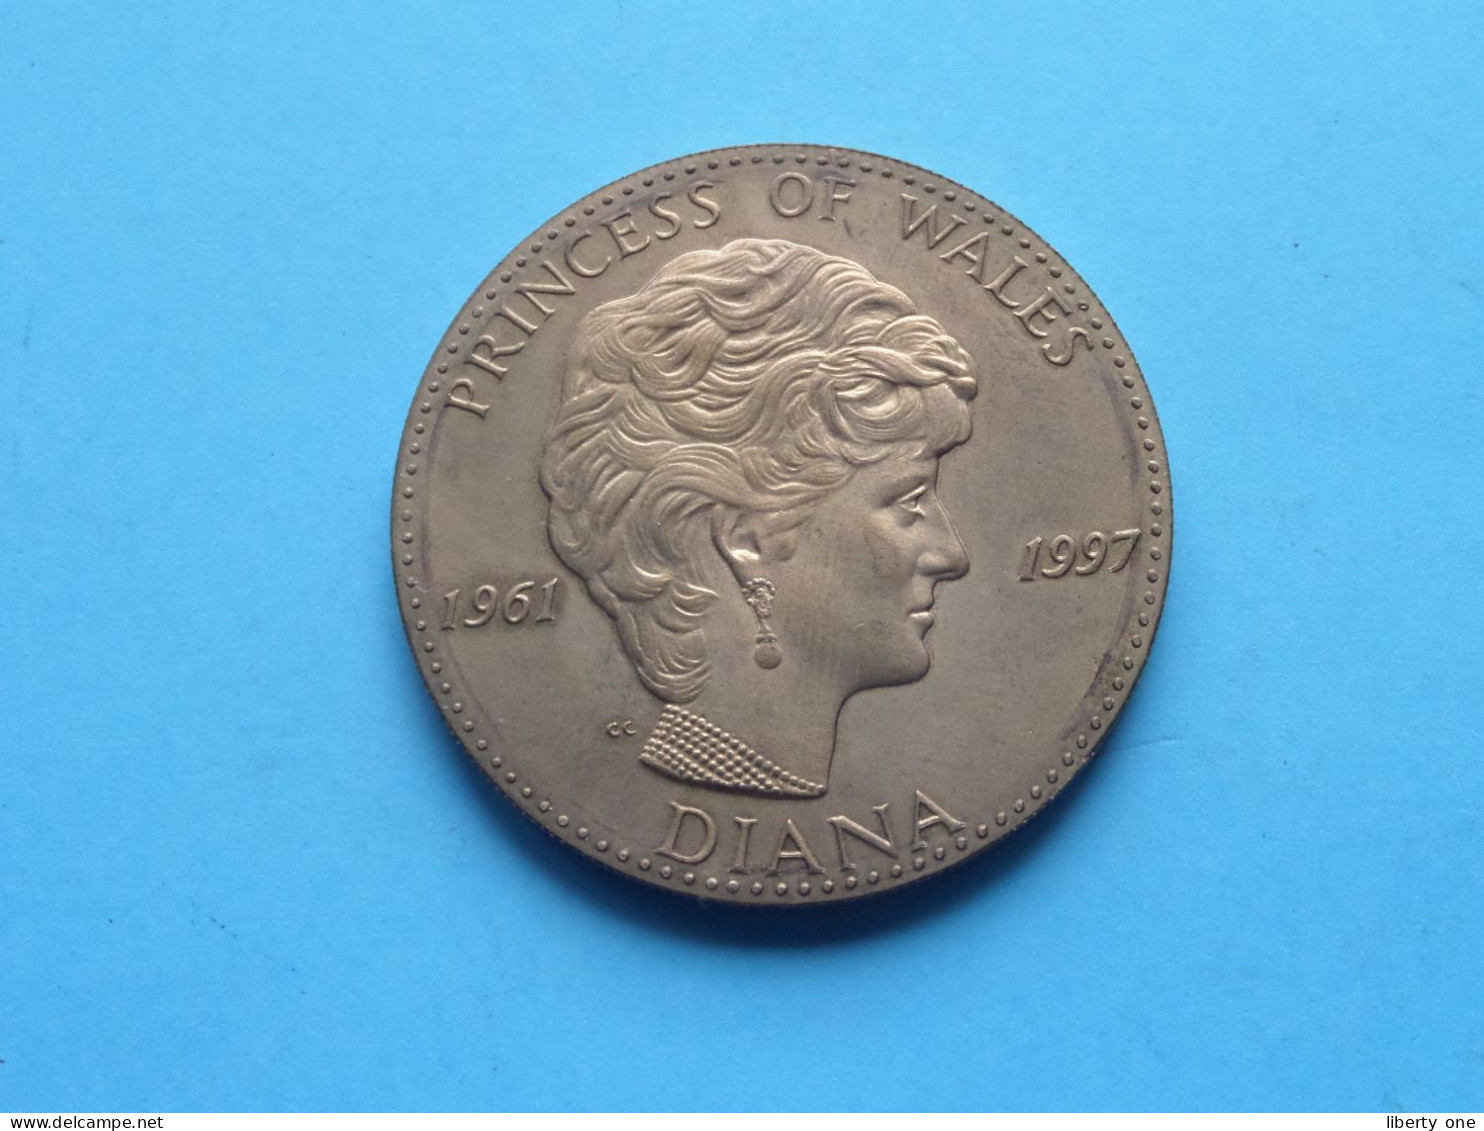 LADY DI - Diana Princess Of Wales 1997 ( See SCANS ) 33 Gr. / 41 Mm. ( Bronze ) 1961-1997 DIANA ( Belgium Coin ) ! - Monedas Elongadas (elongated Coins)